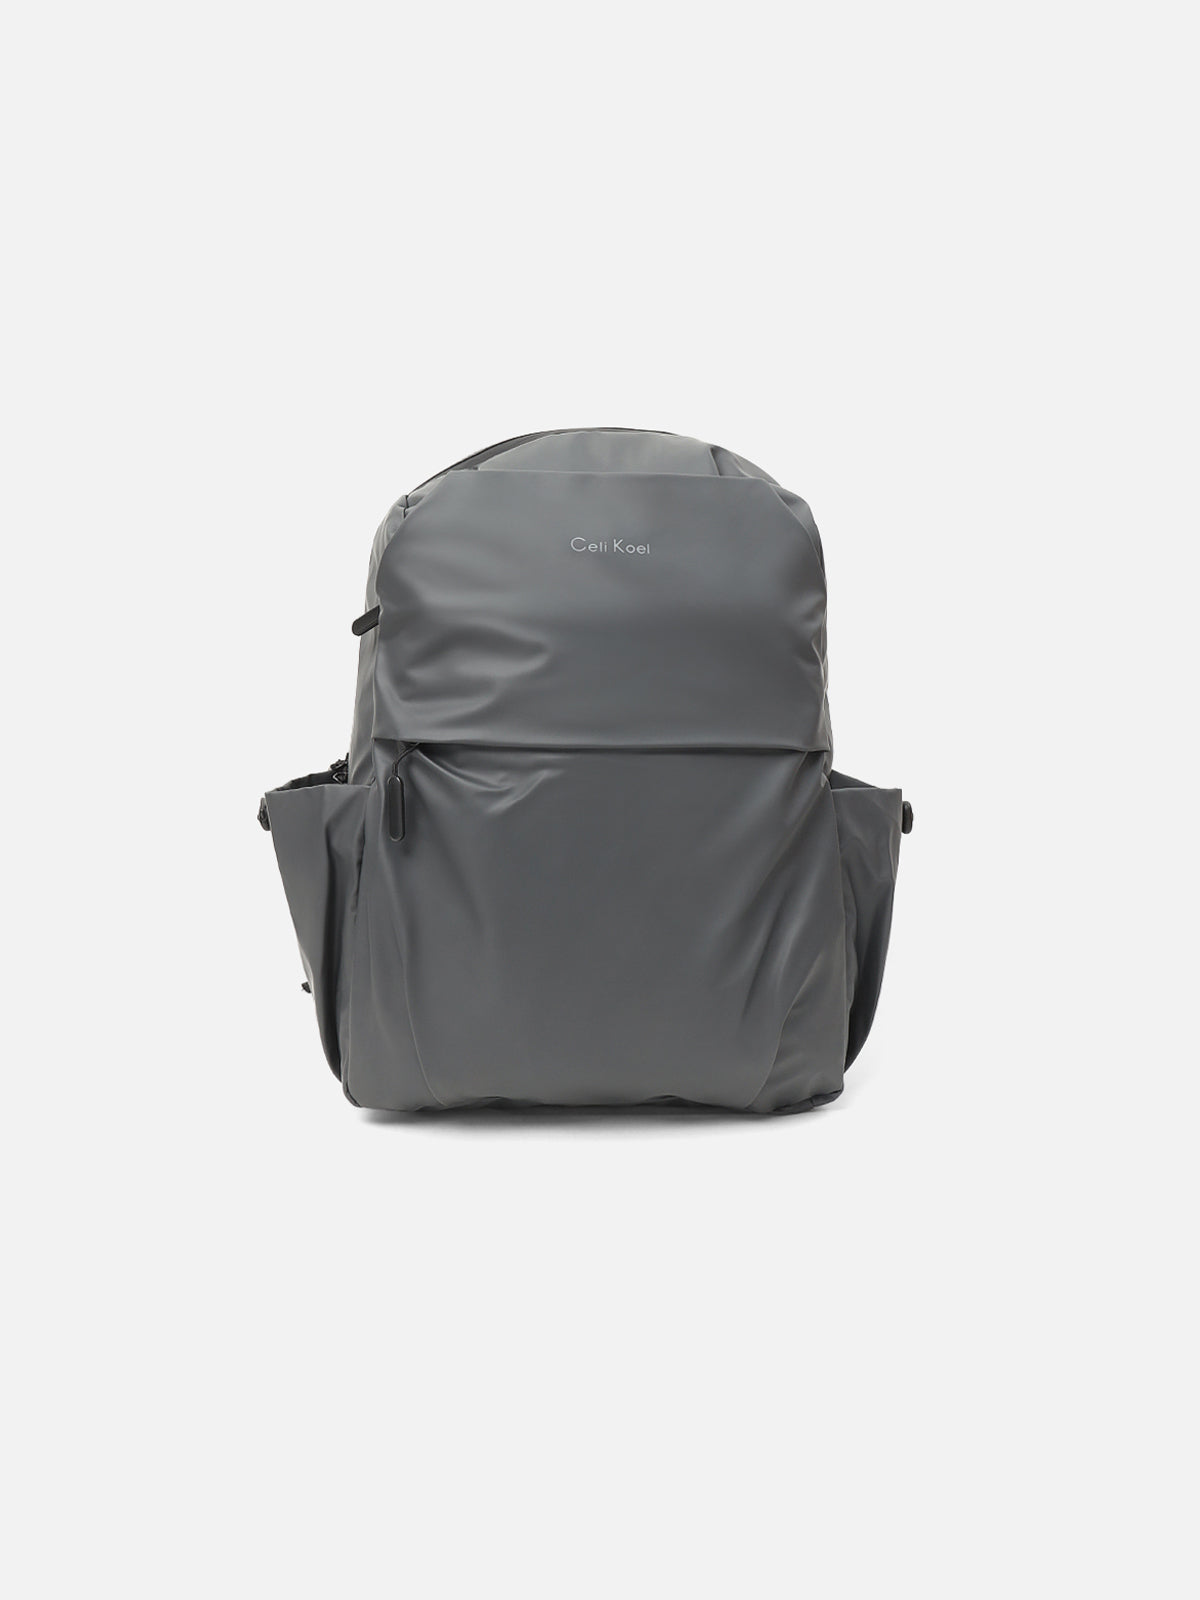 Grey Backpack - FABG24-002